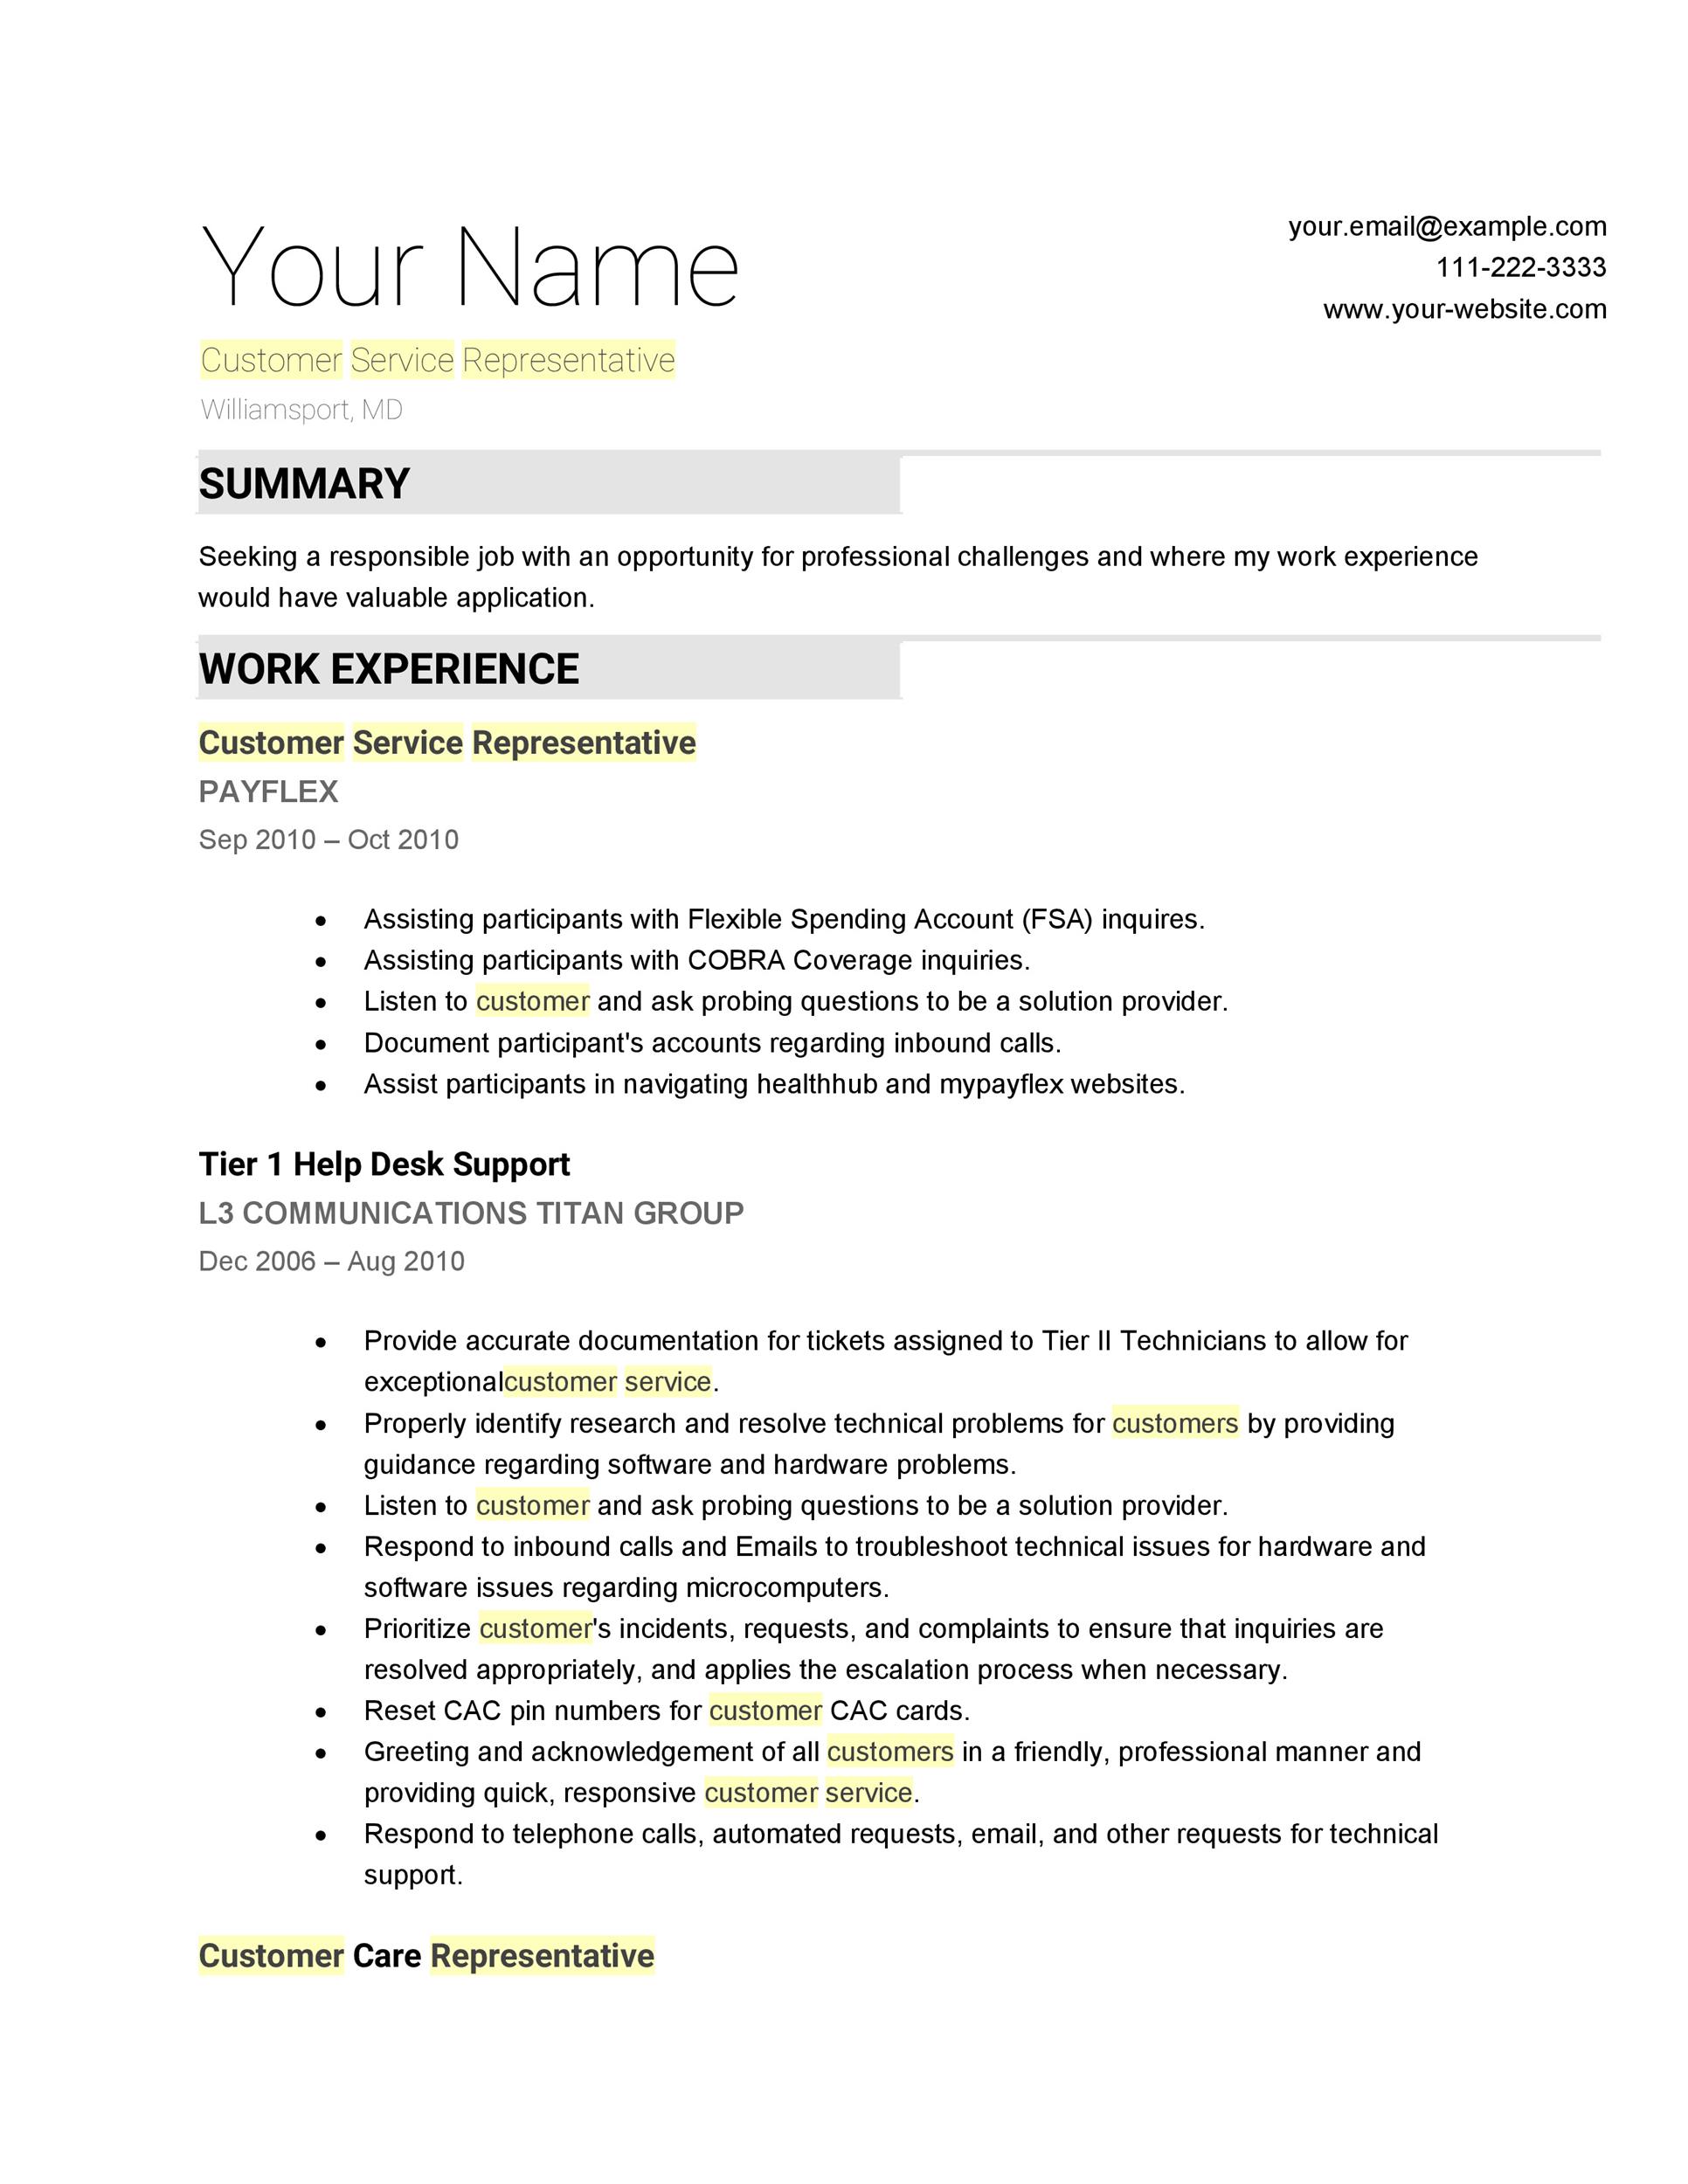 30-customer-service-resume-examples-templatelab